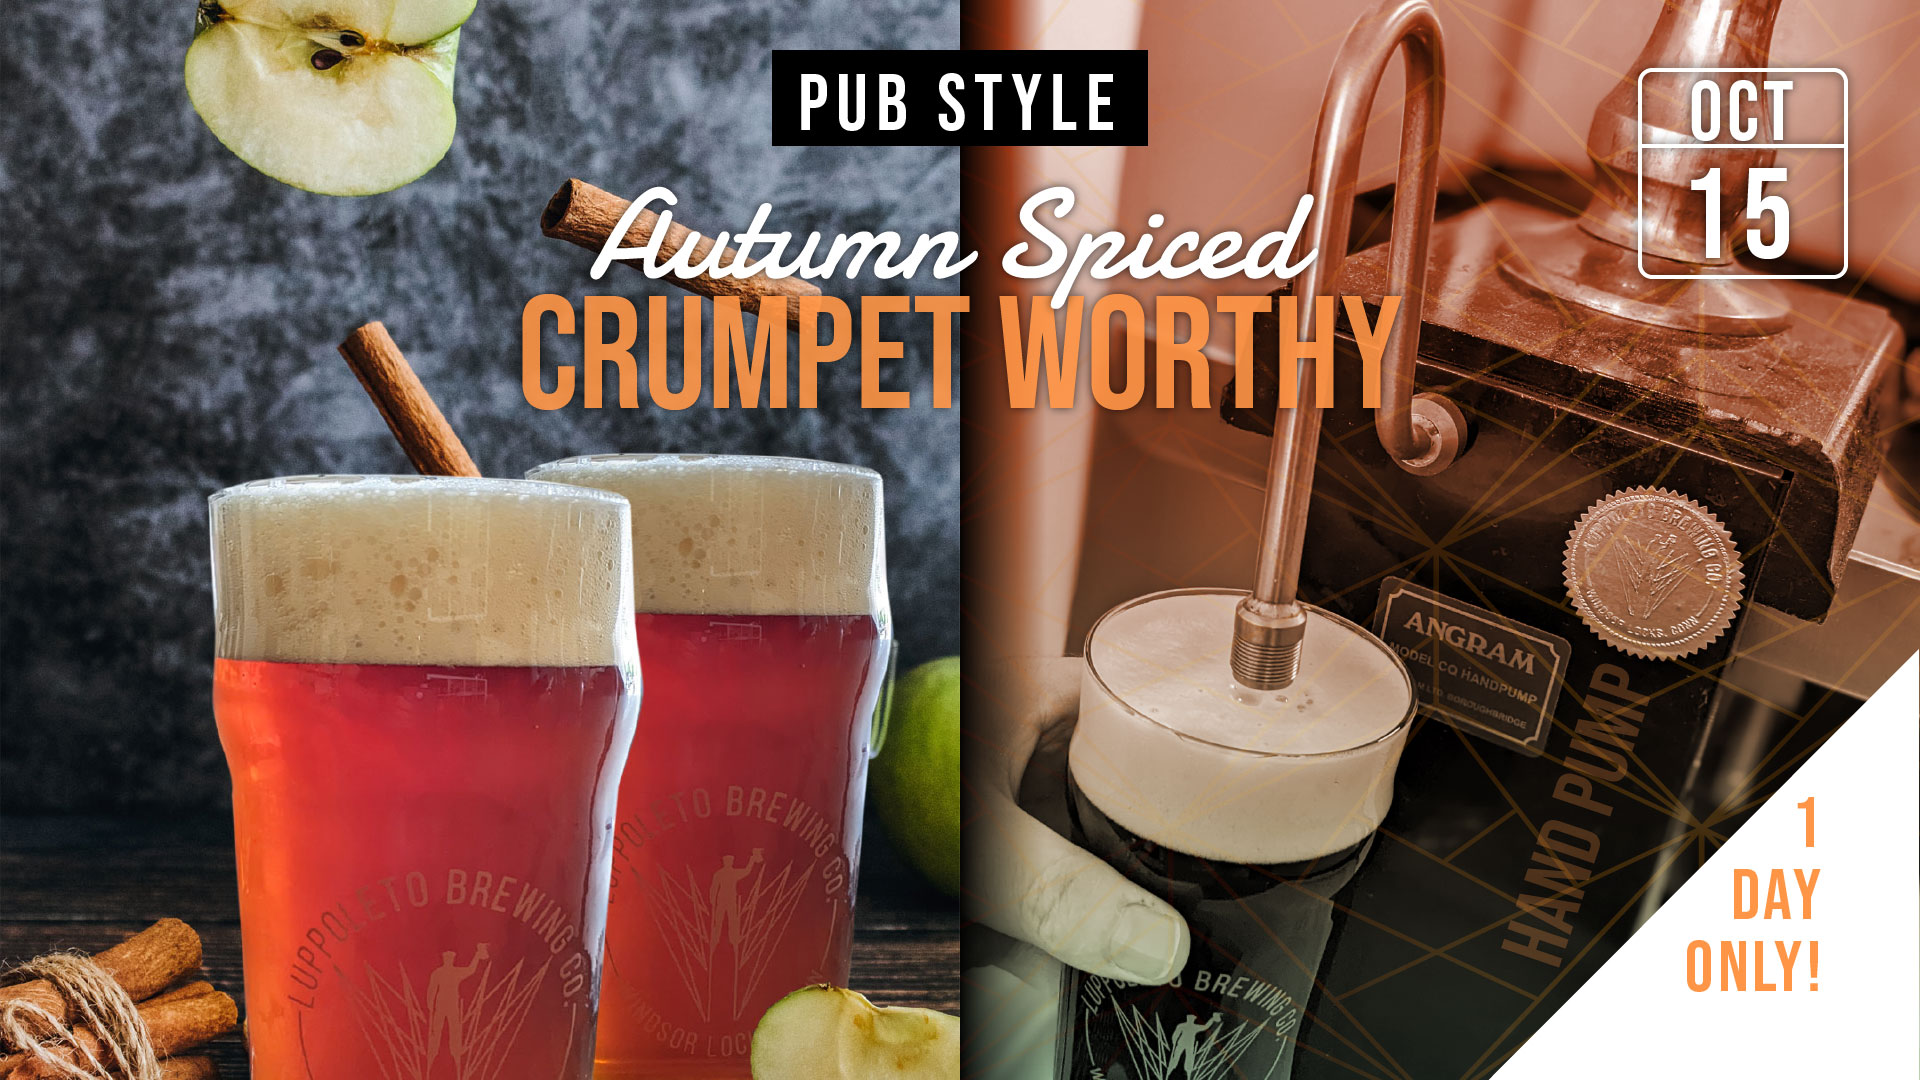 Pub style autumn spiced crumpet worthy photo